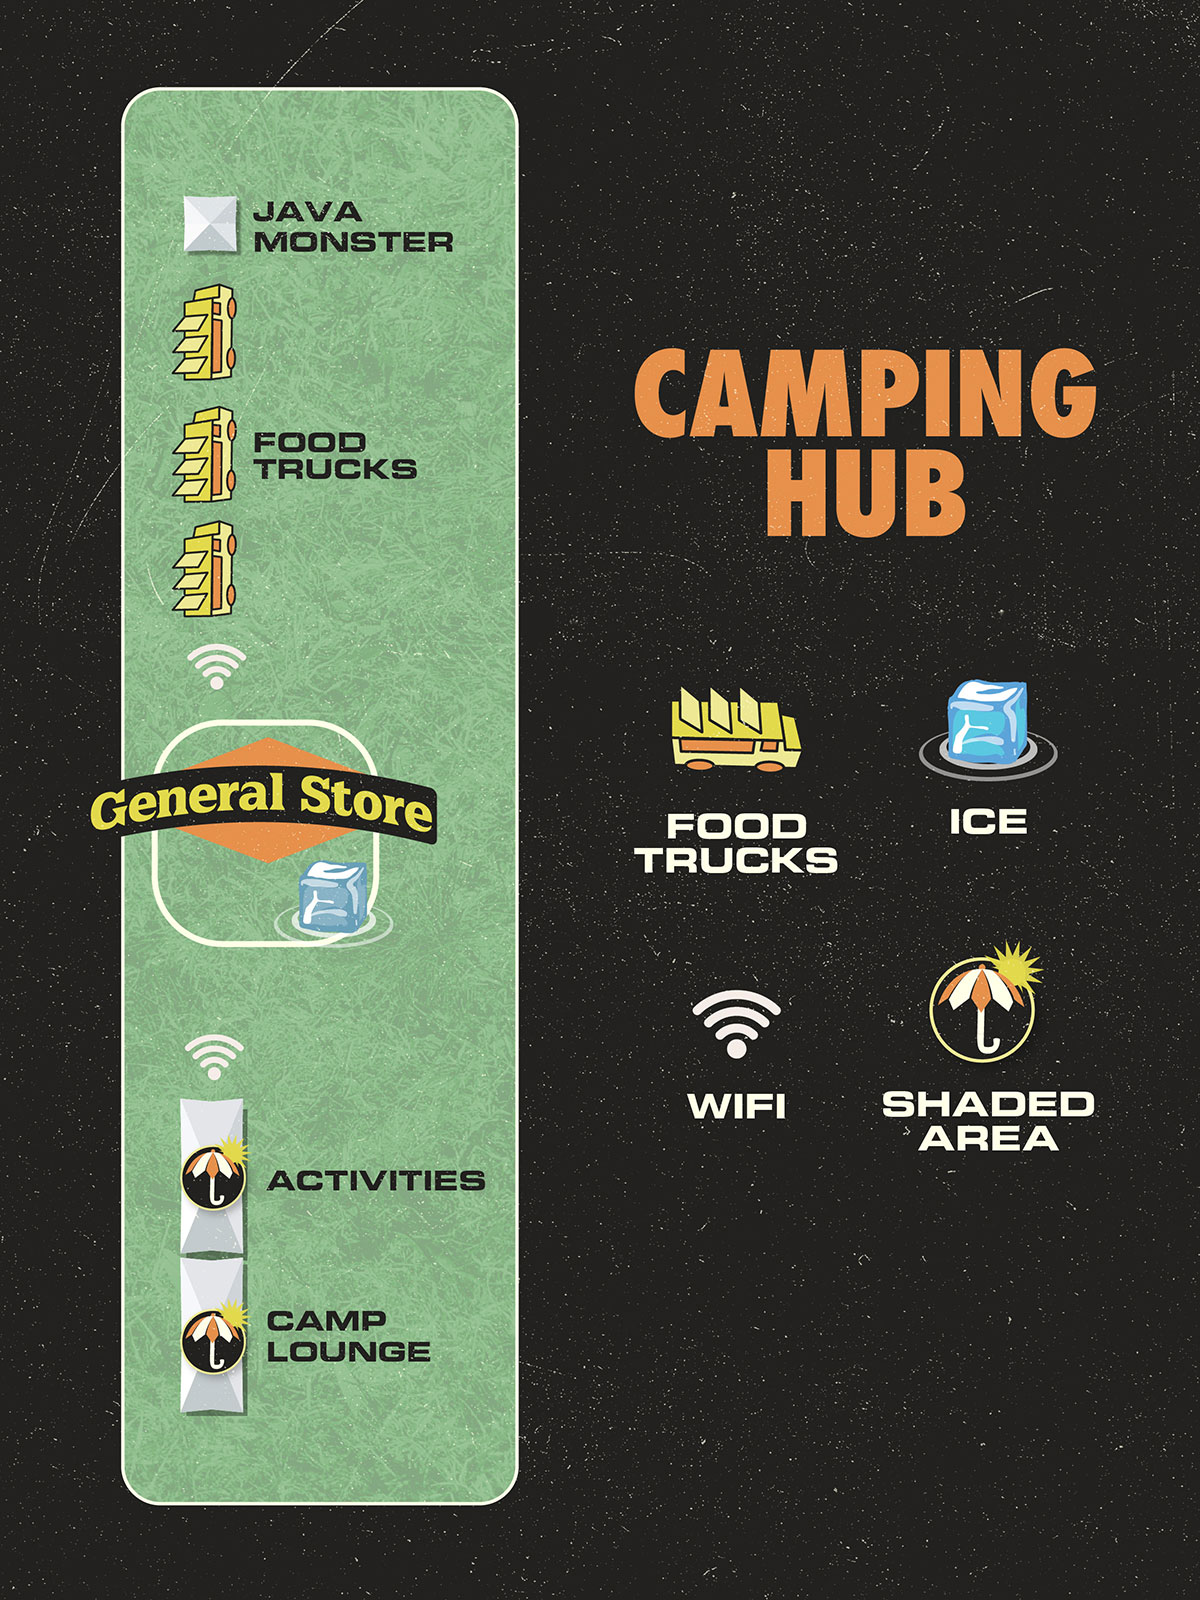 Power Trip Camping Hub Map